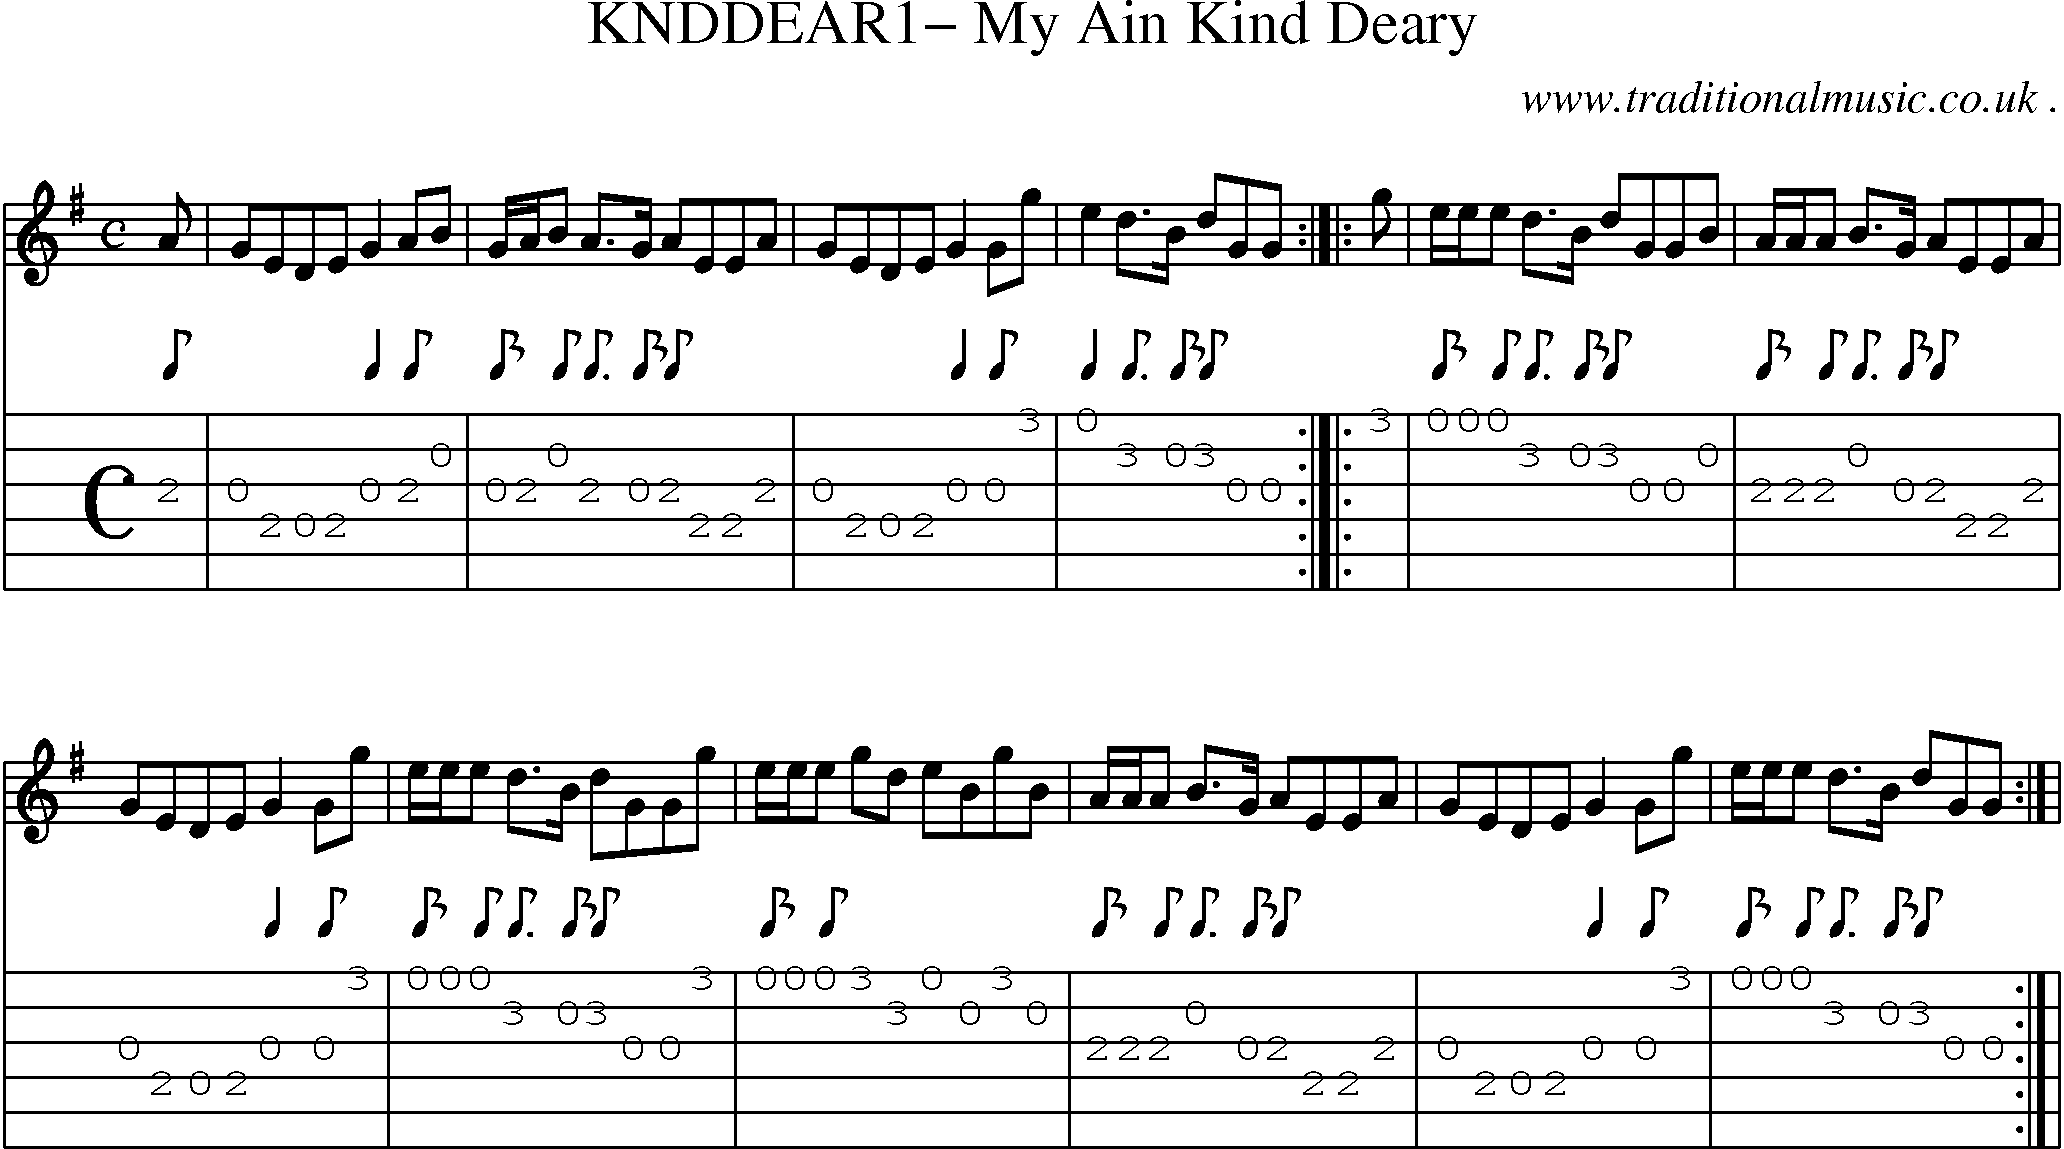 Sheet-Music and Guitar Tabs for Knddear1 My Ain Kind Deary